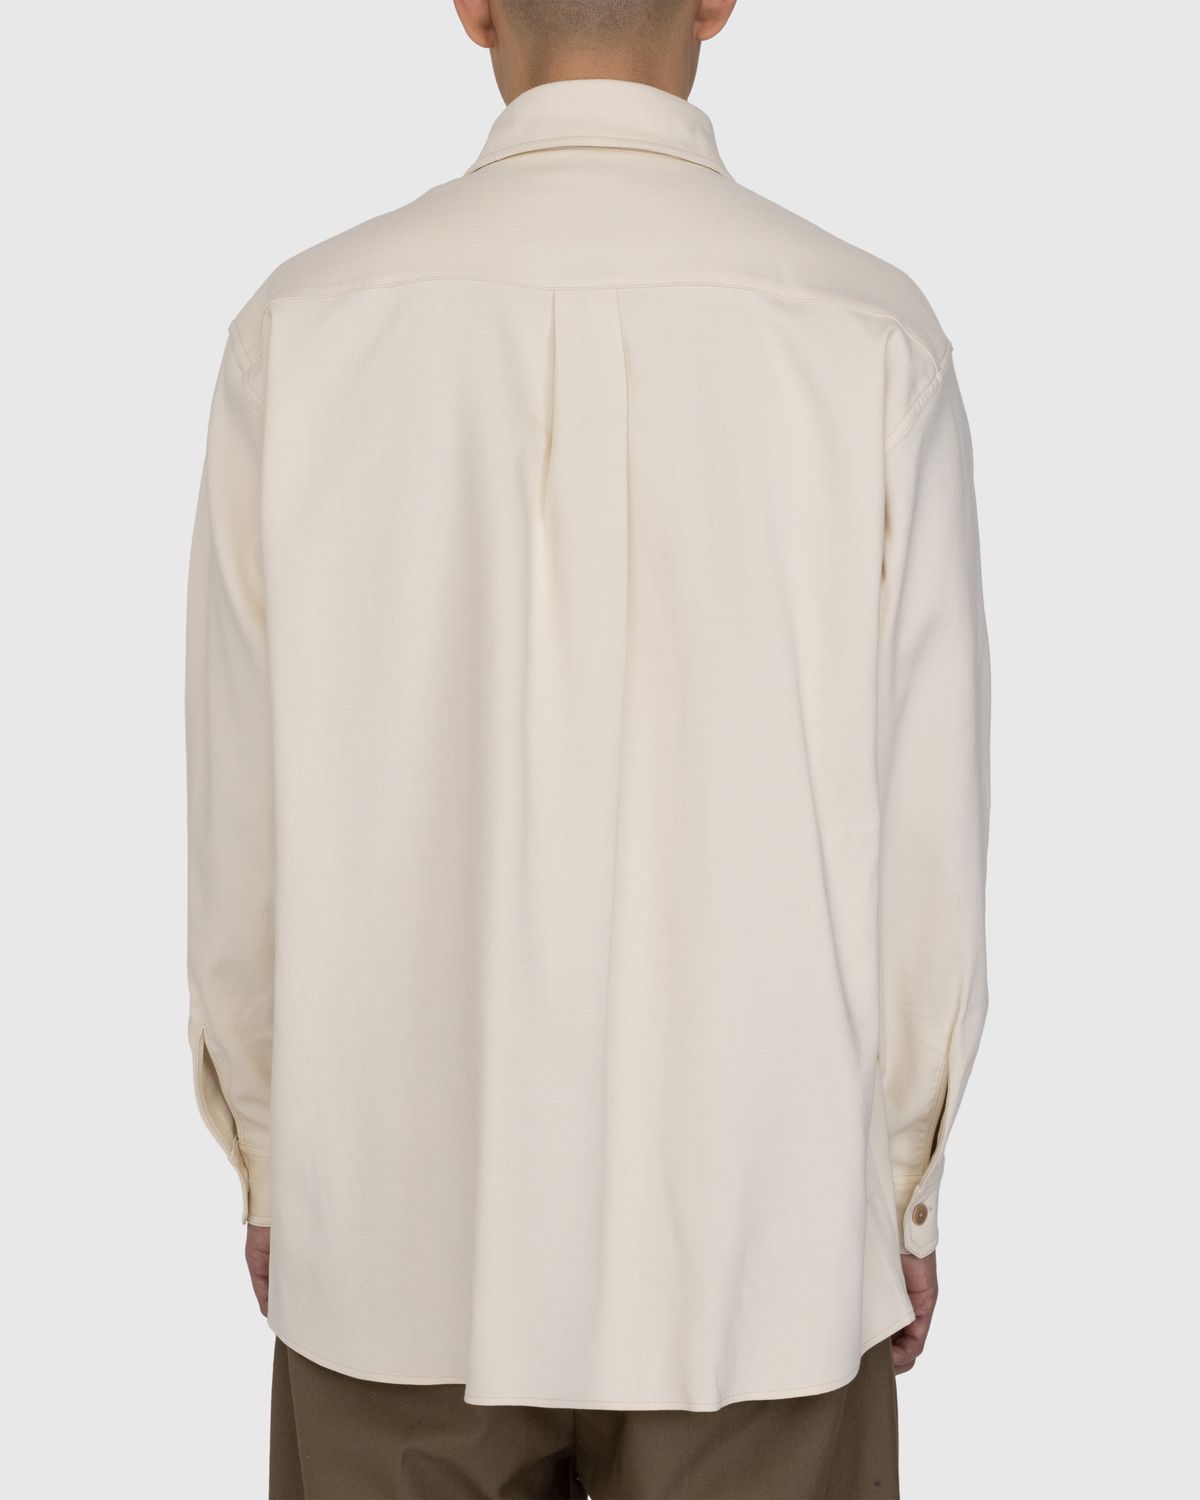 Lemaire – Wool Blend Shirt Beige - Longsleeve Shirts - Beige - Image 4